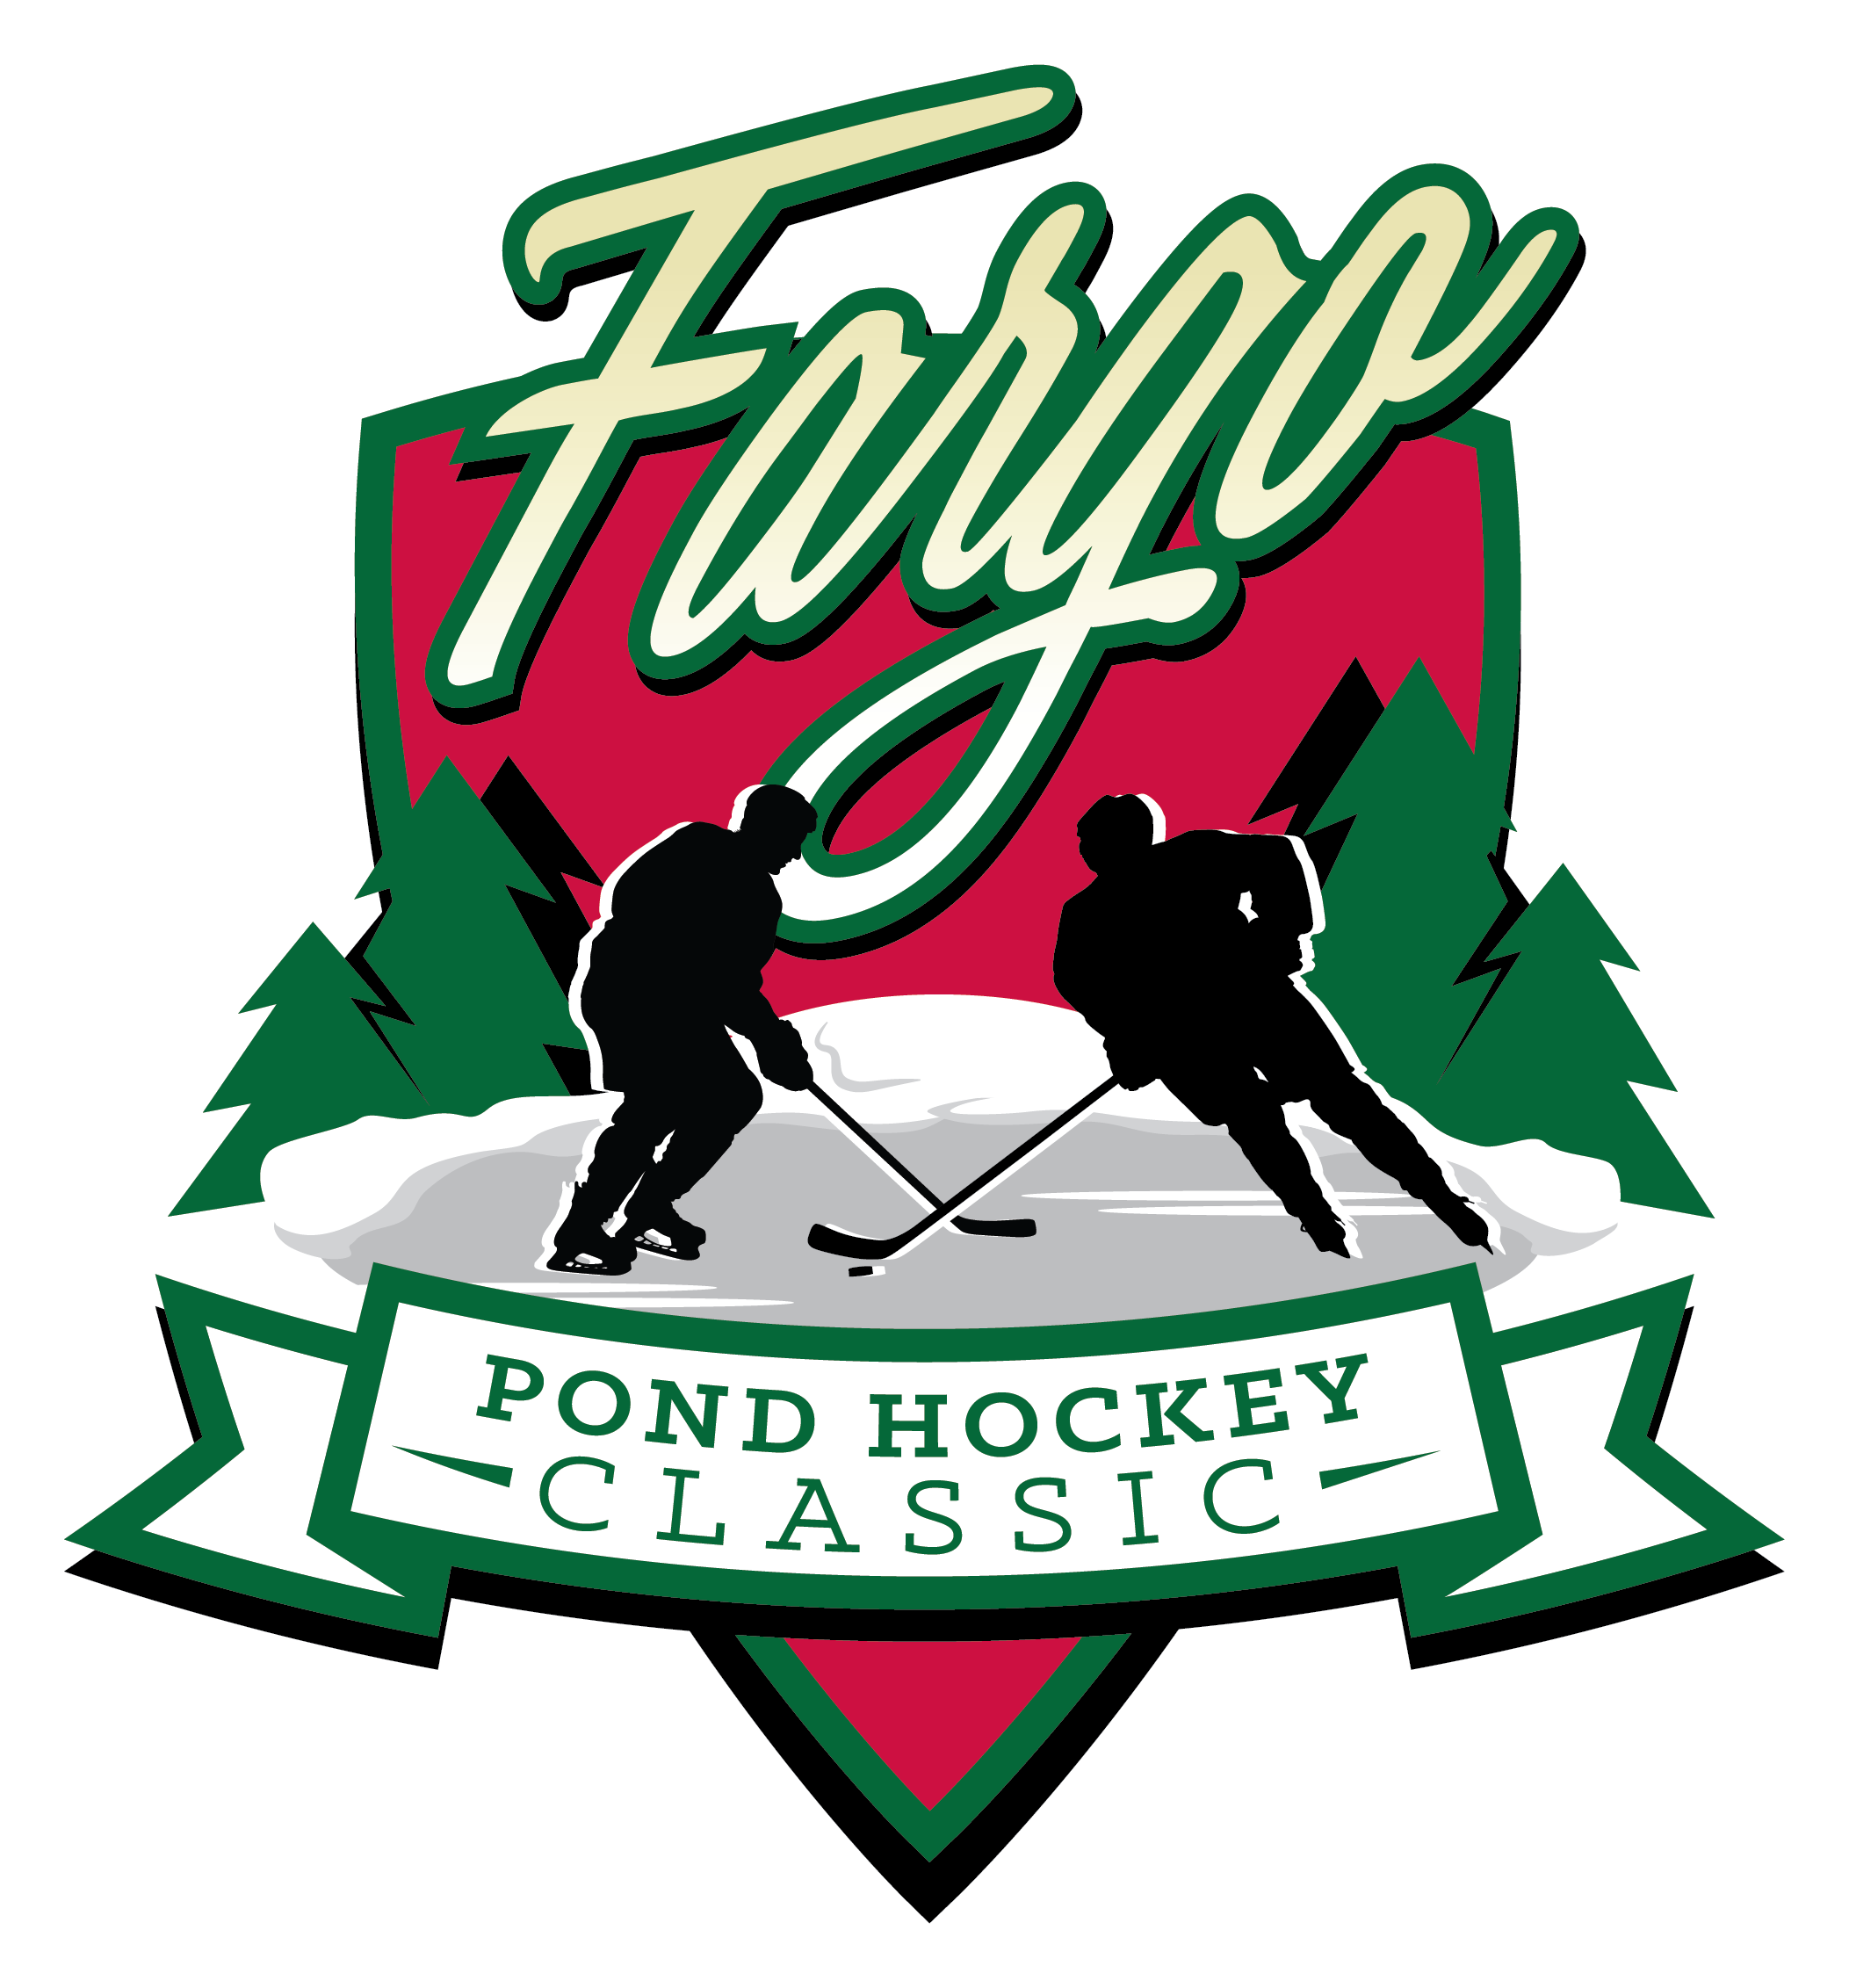 This image shows the Fargo Pond Hockey Classic logo.